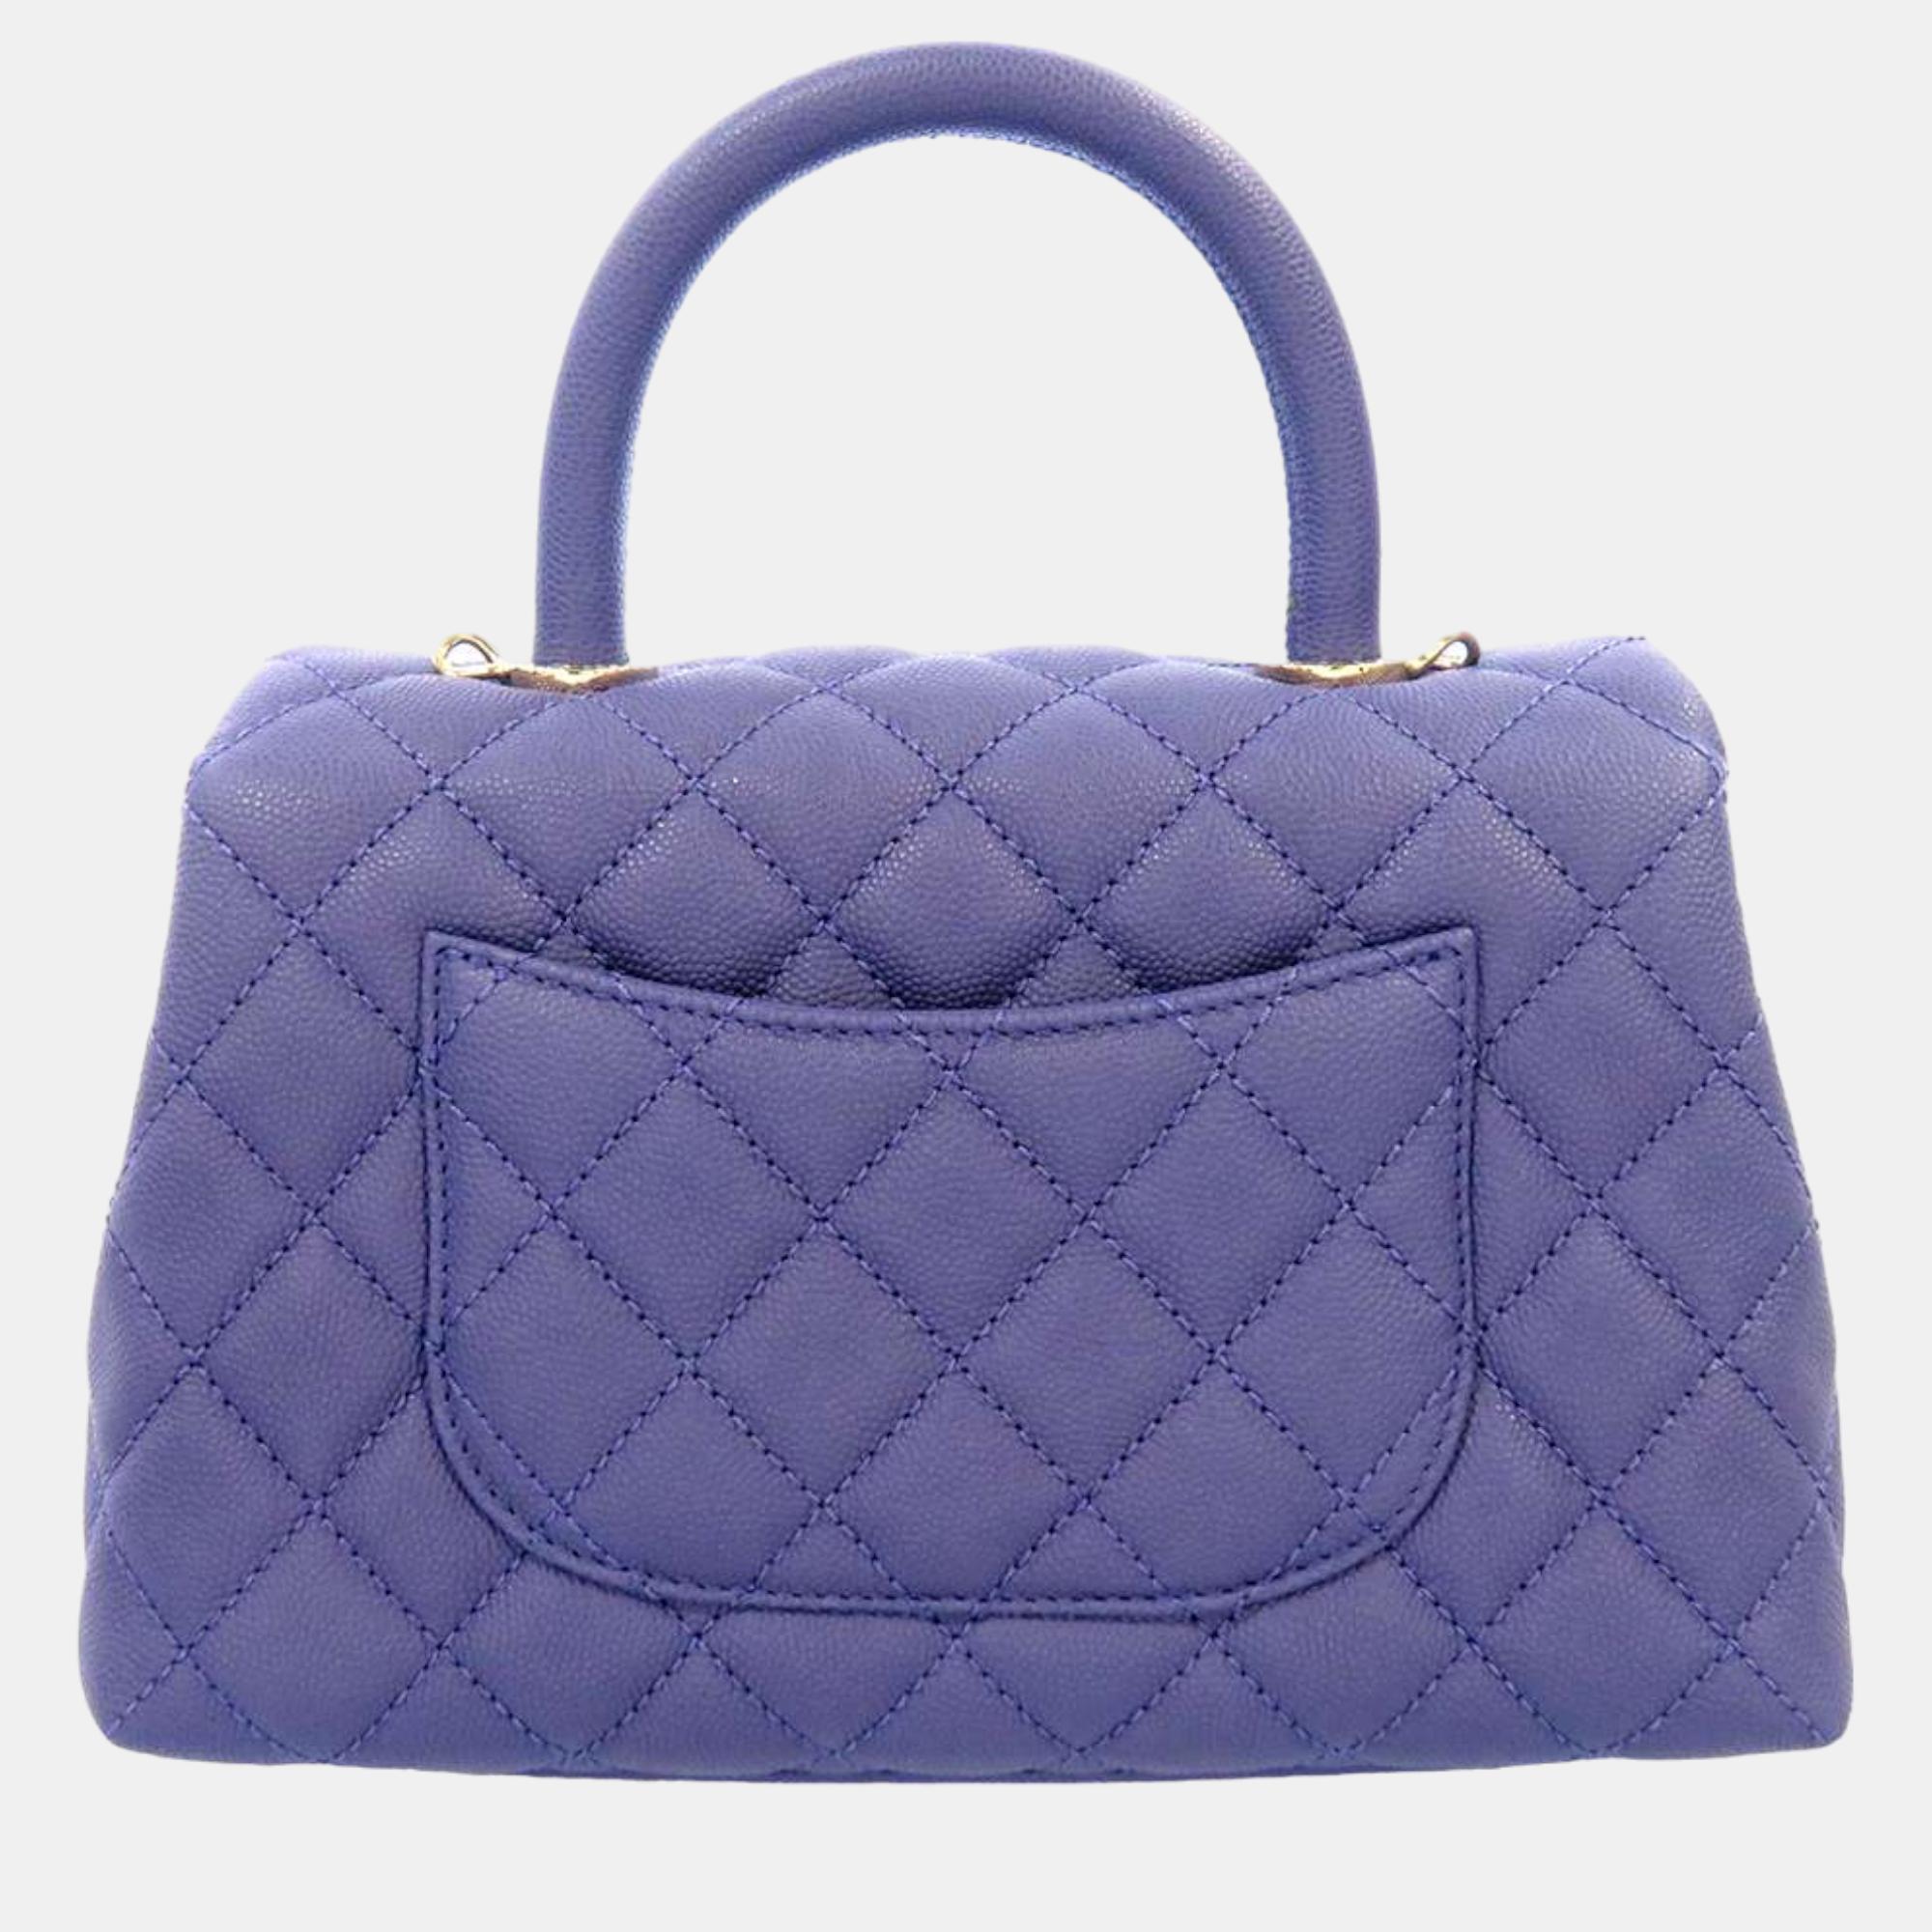 Chanel Purple Caviar Leather Coco Top Handle Bag